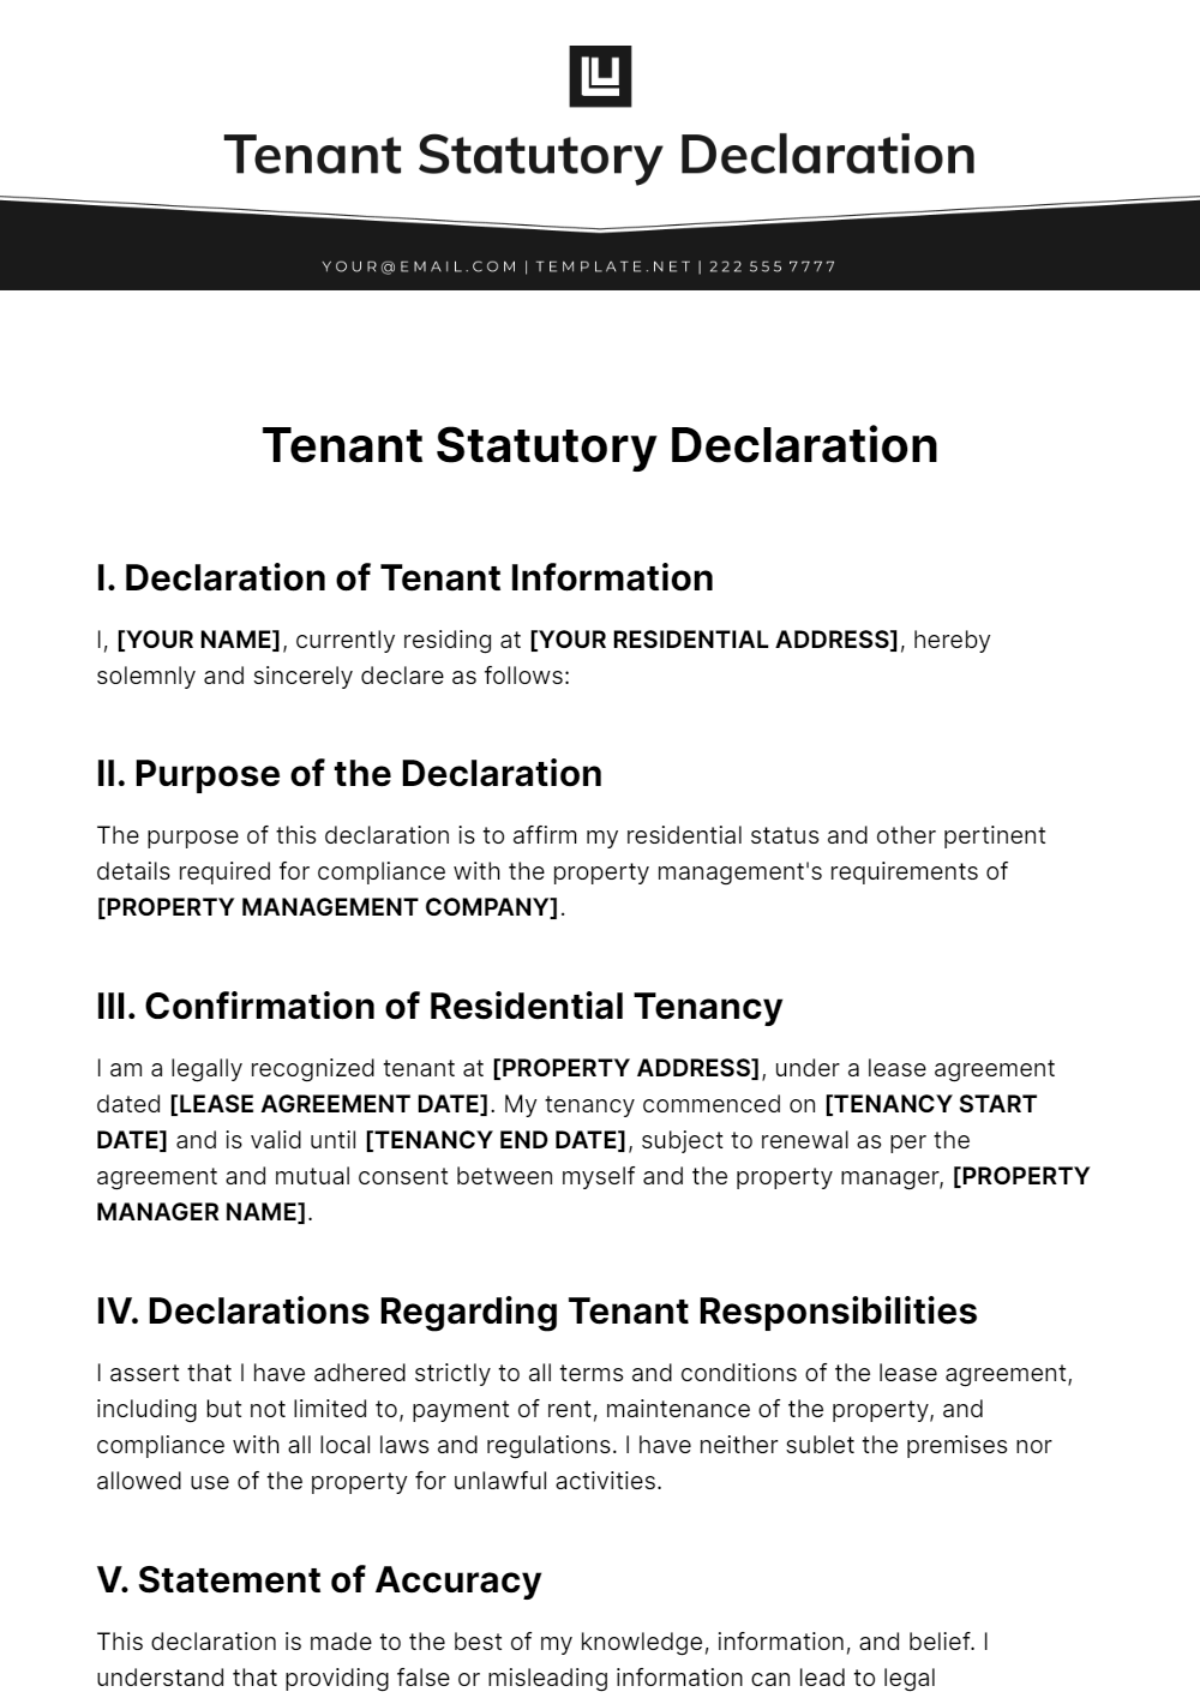 Free Tenant Statutory Declaration Template